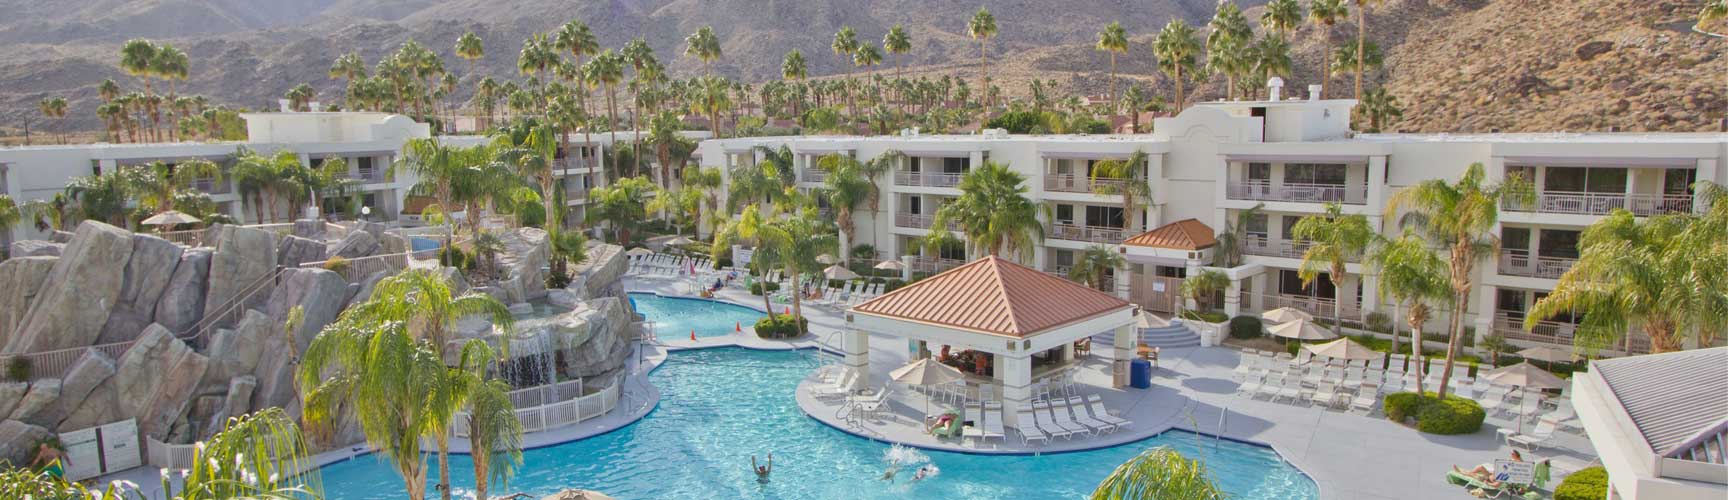 Palm Springs Canyon Resort